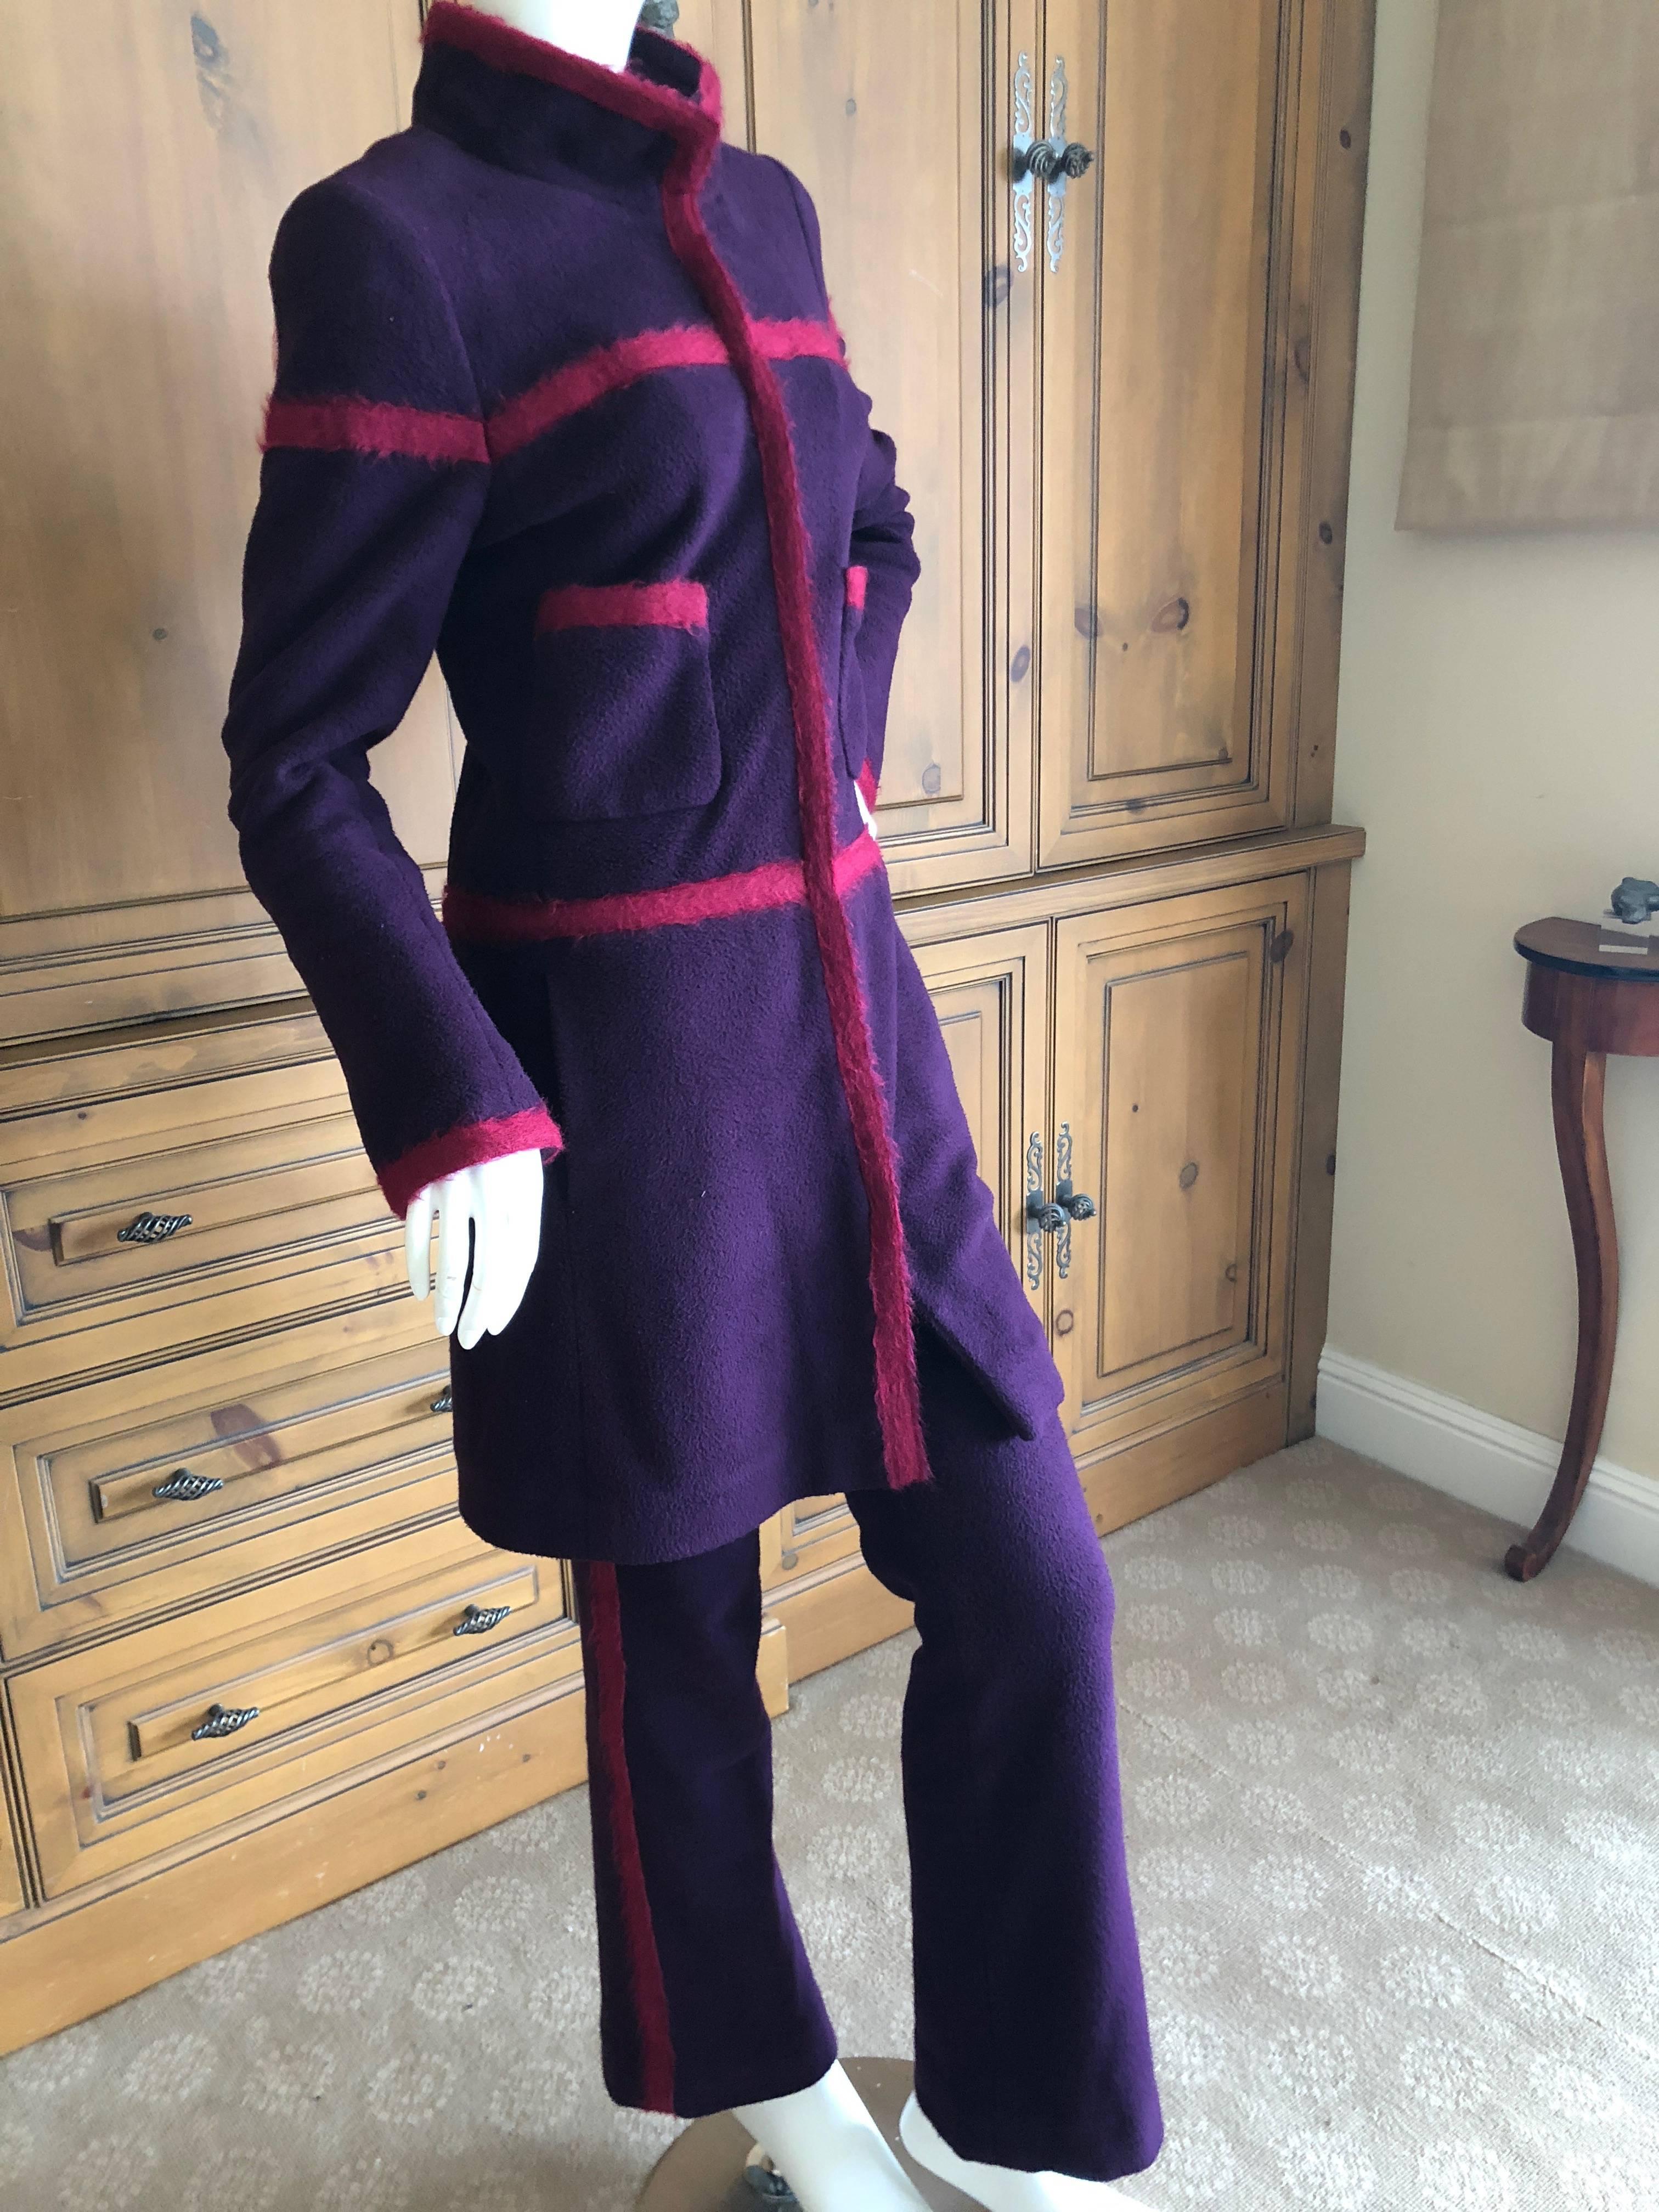 Wonderful purple cotton fleece pant suit from Chanel circa Autumn 2000.
Size 36 
Jacket
Bust 36